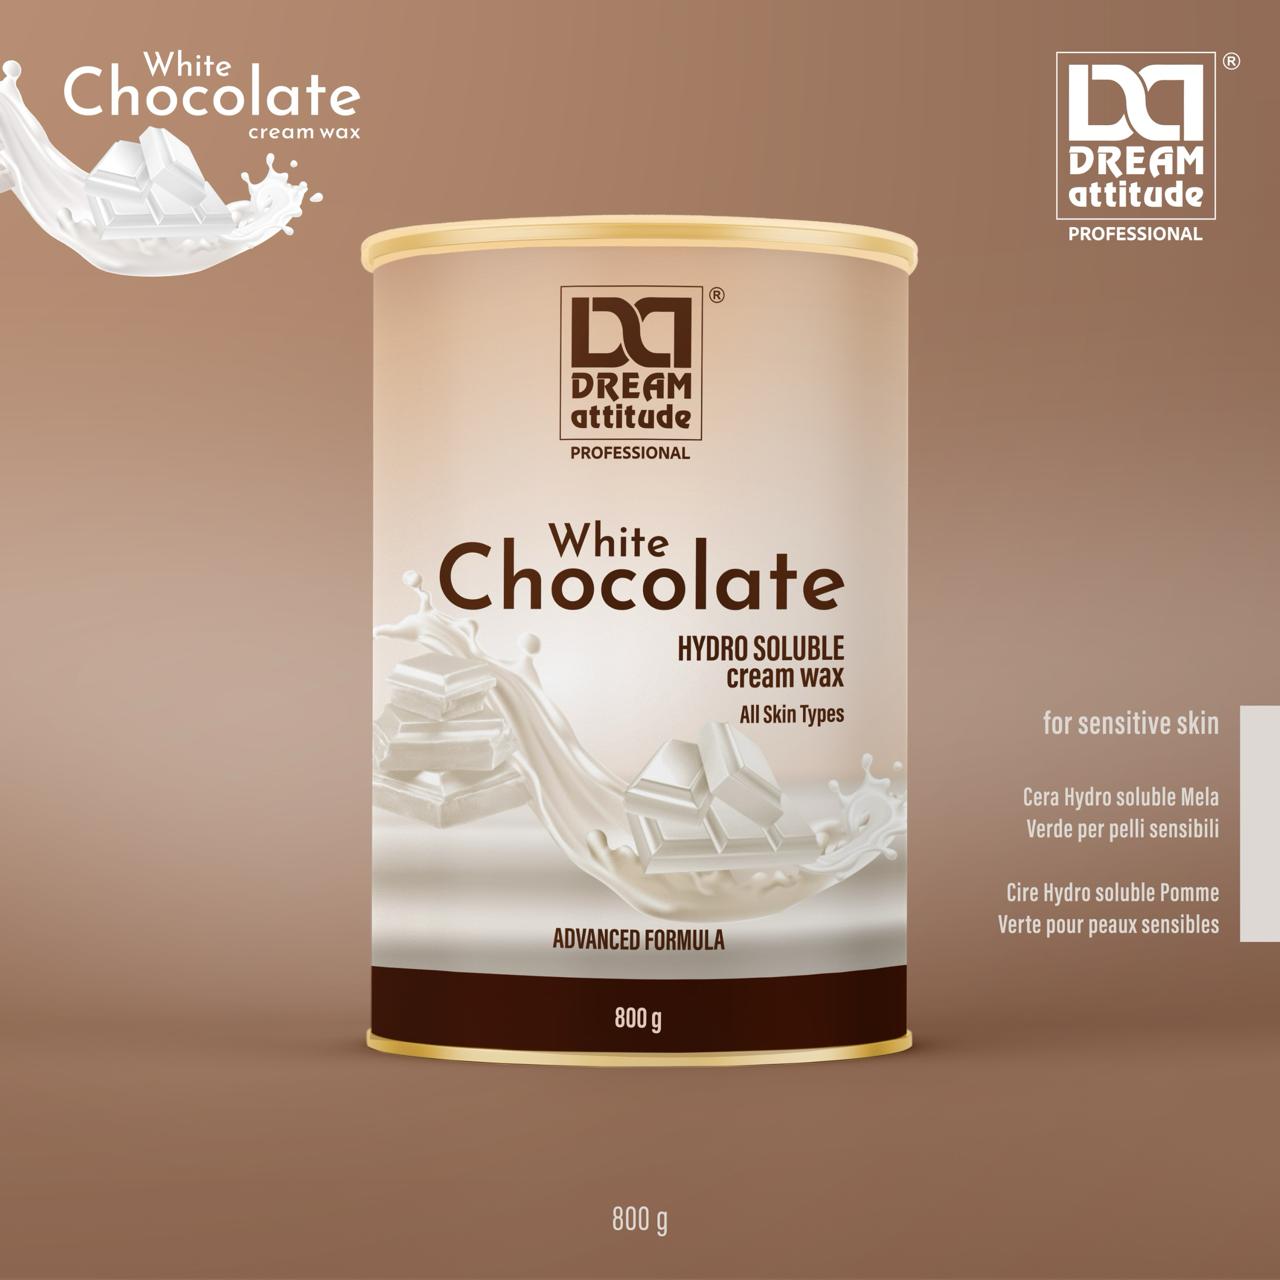 Introduction to DREAM Attitude White Chocolate Hydro Soluble Cream Wax